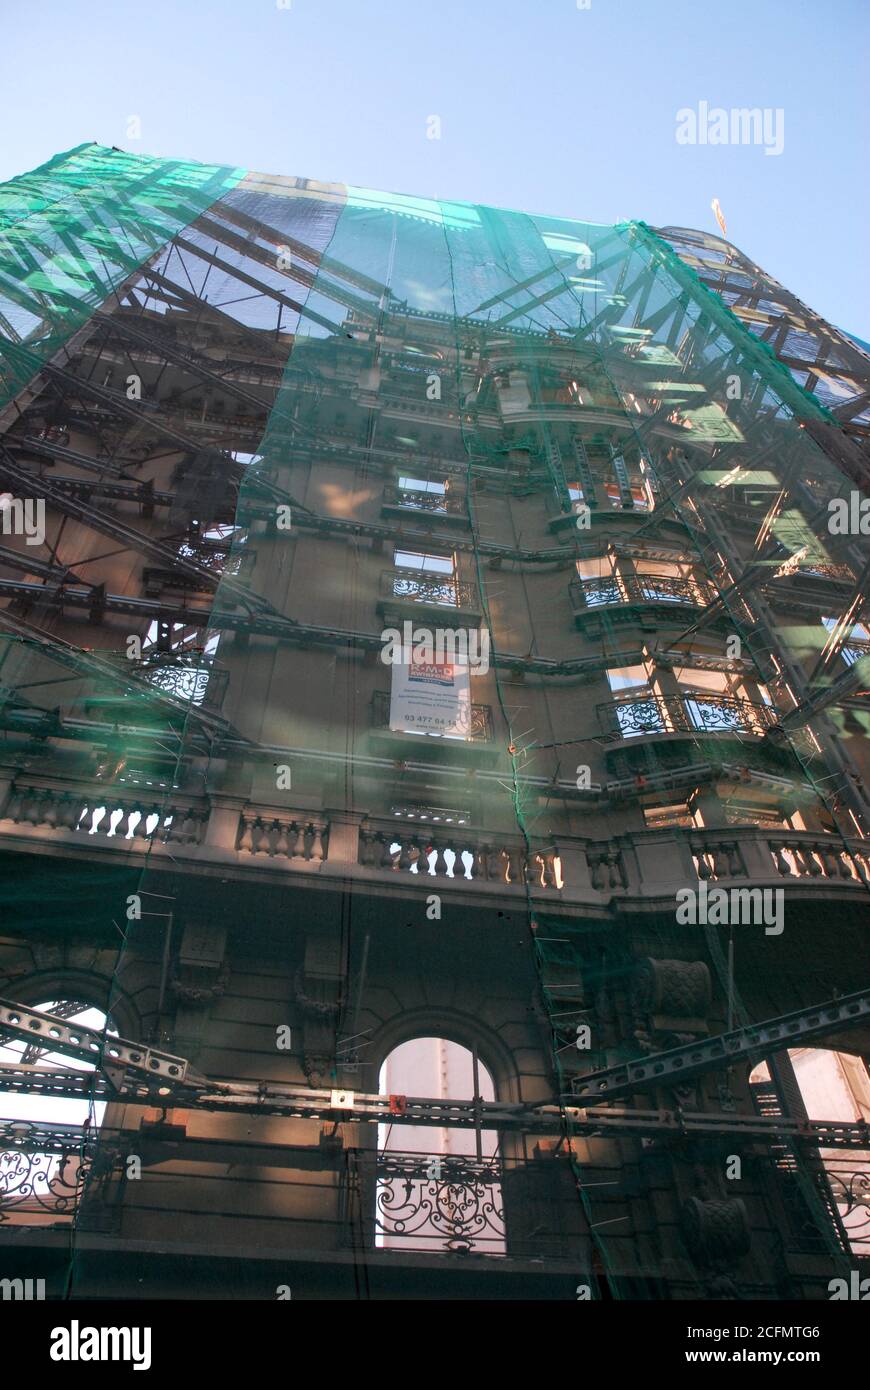 roof beams supporting a building facade under construction Ohla Hotel Via  Layetana, Barcelona, Stock Photo